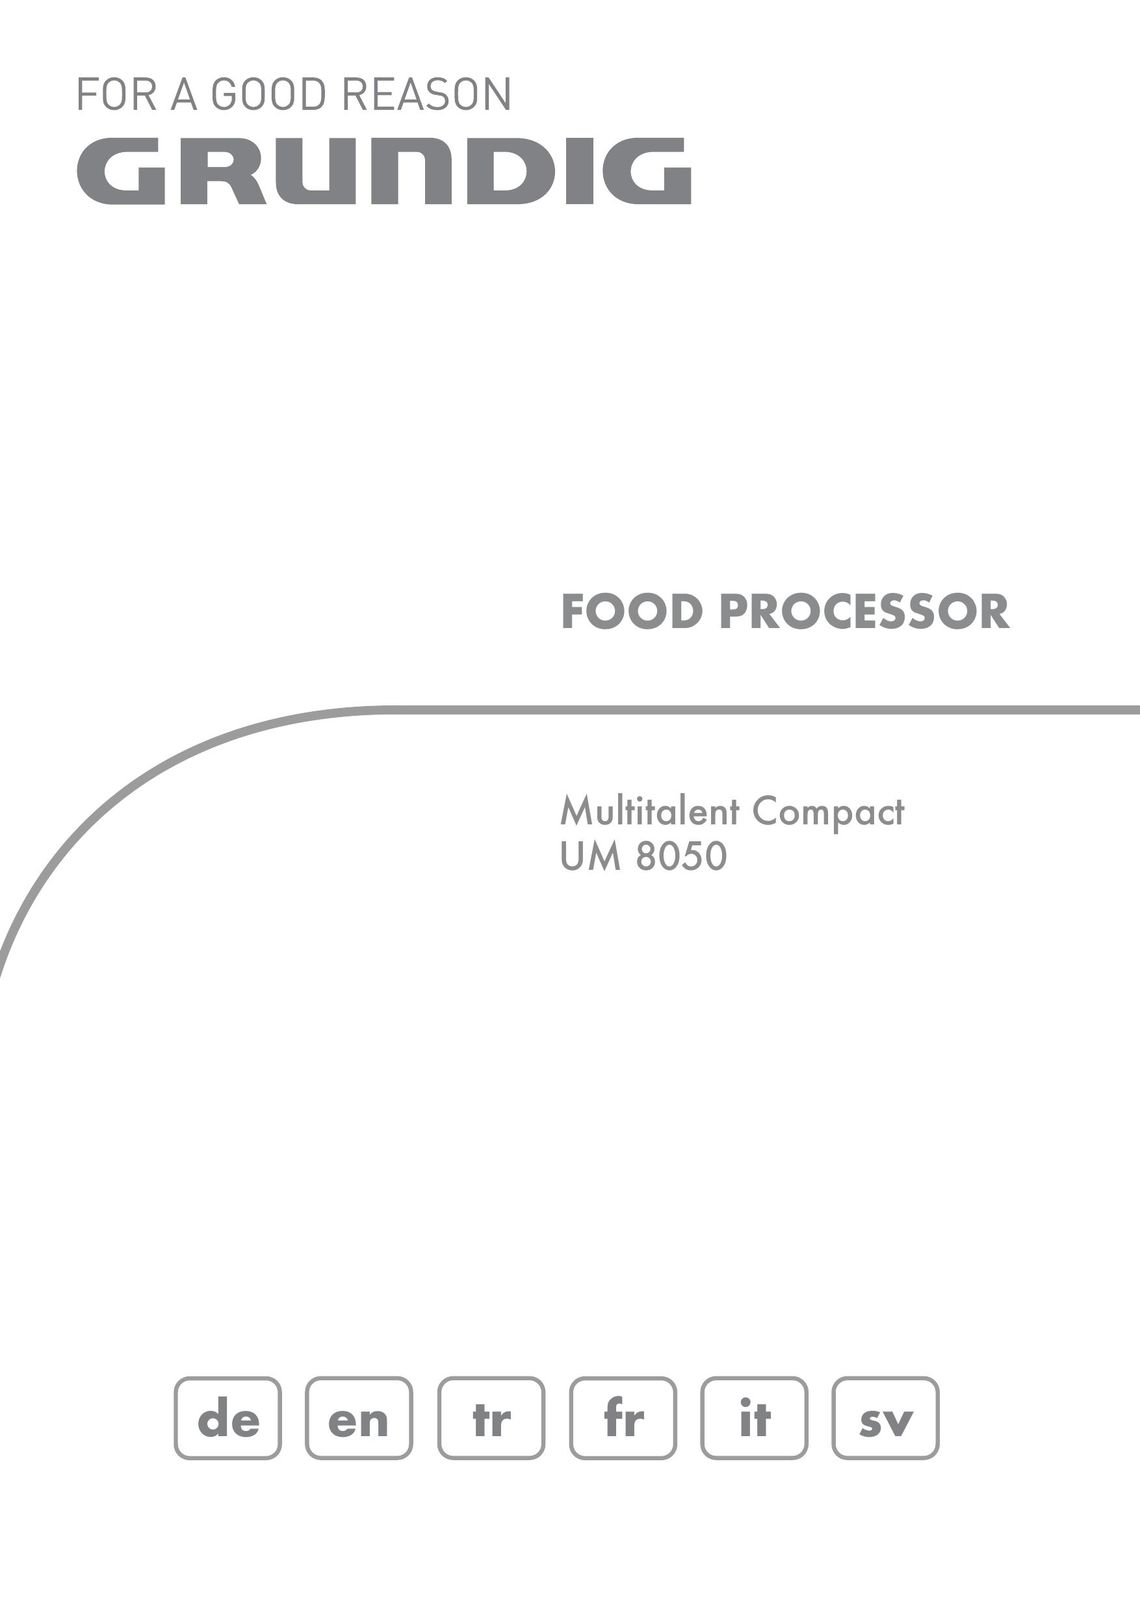 Grundig UM 8050 Food Processor User Manual